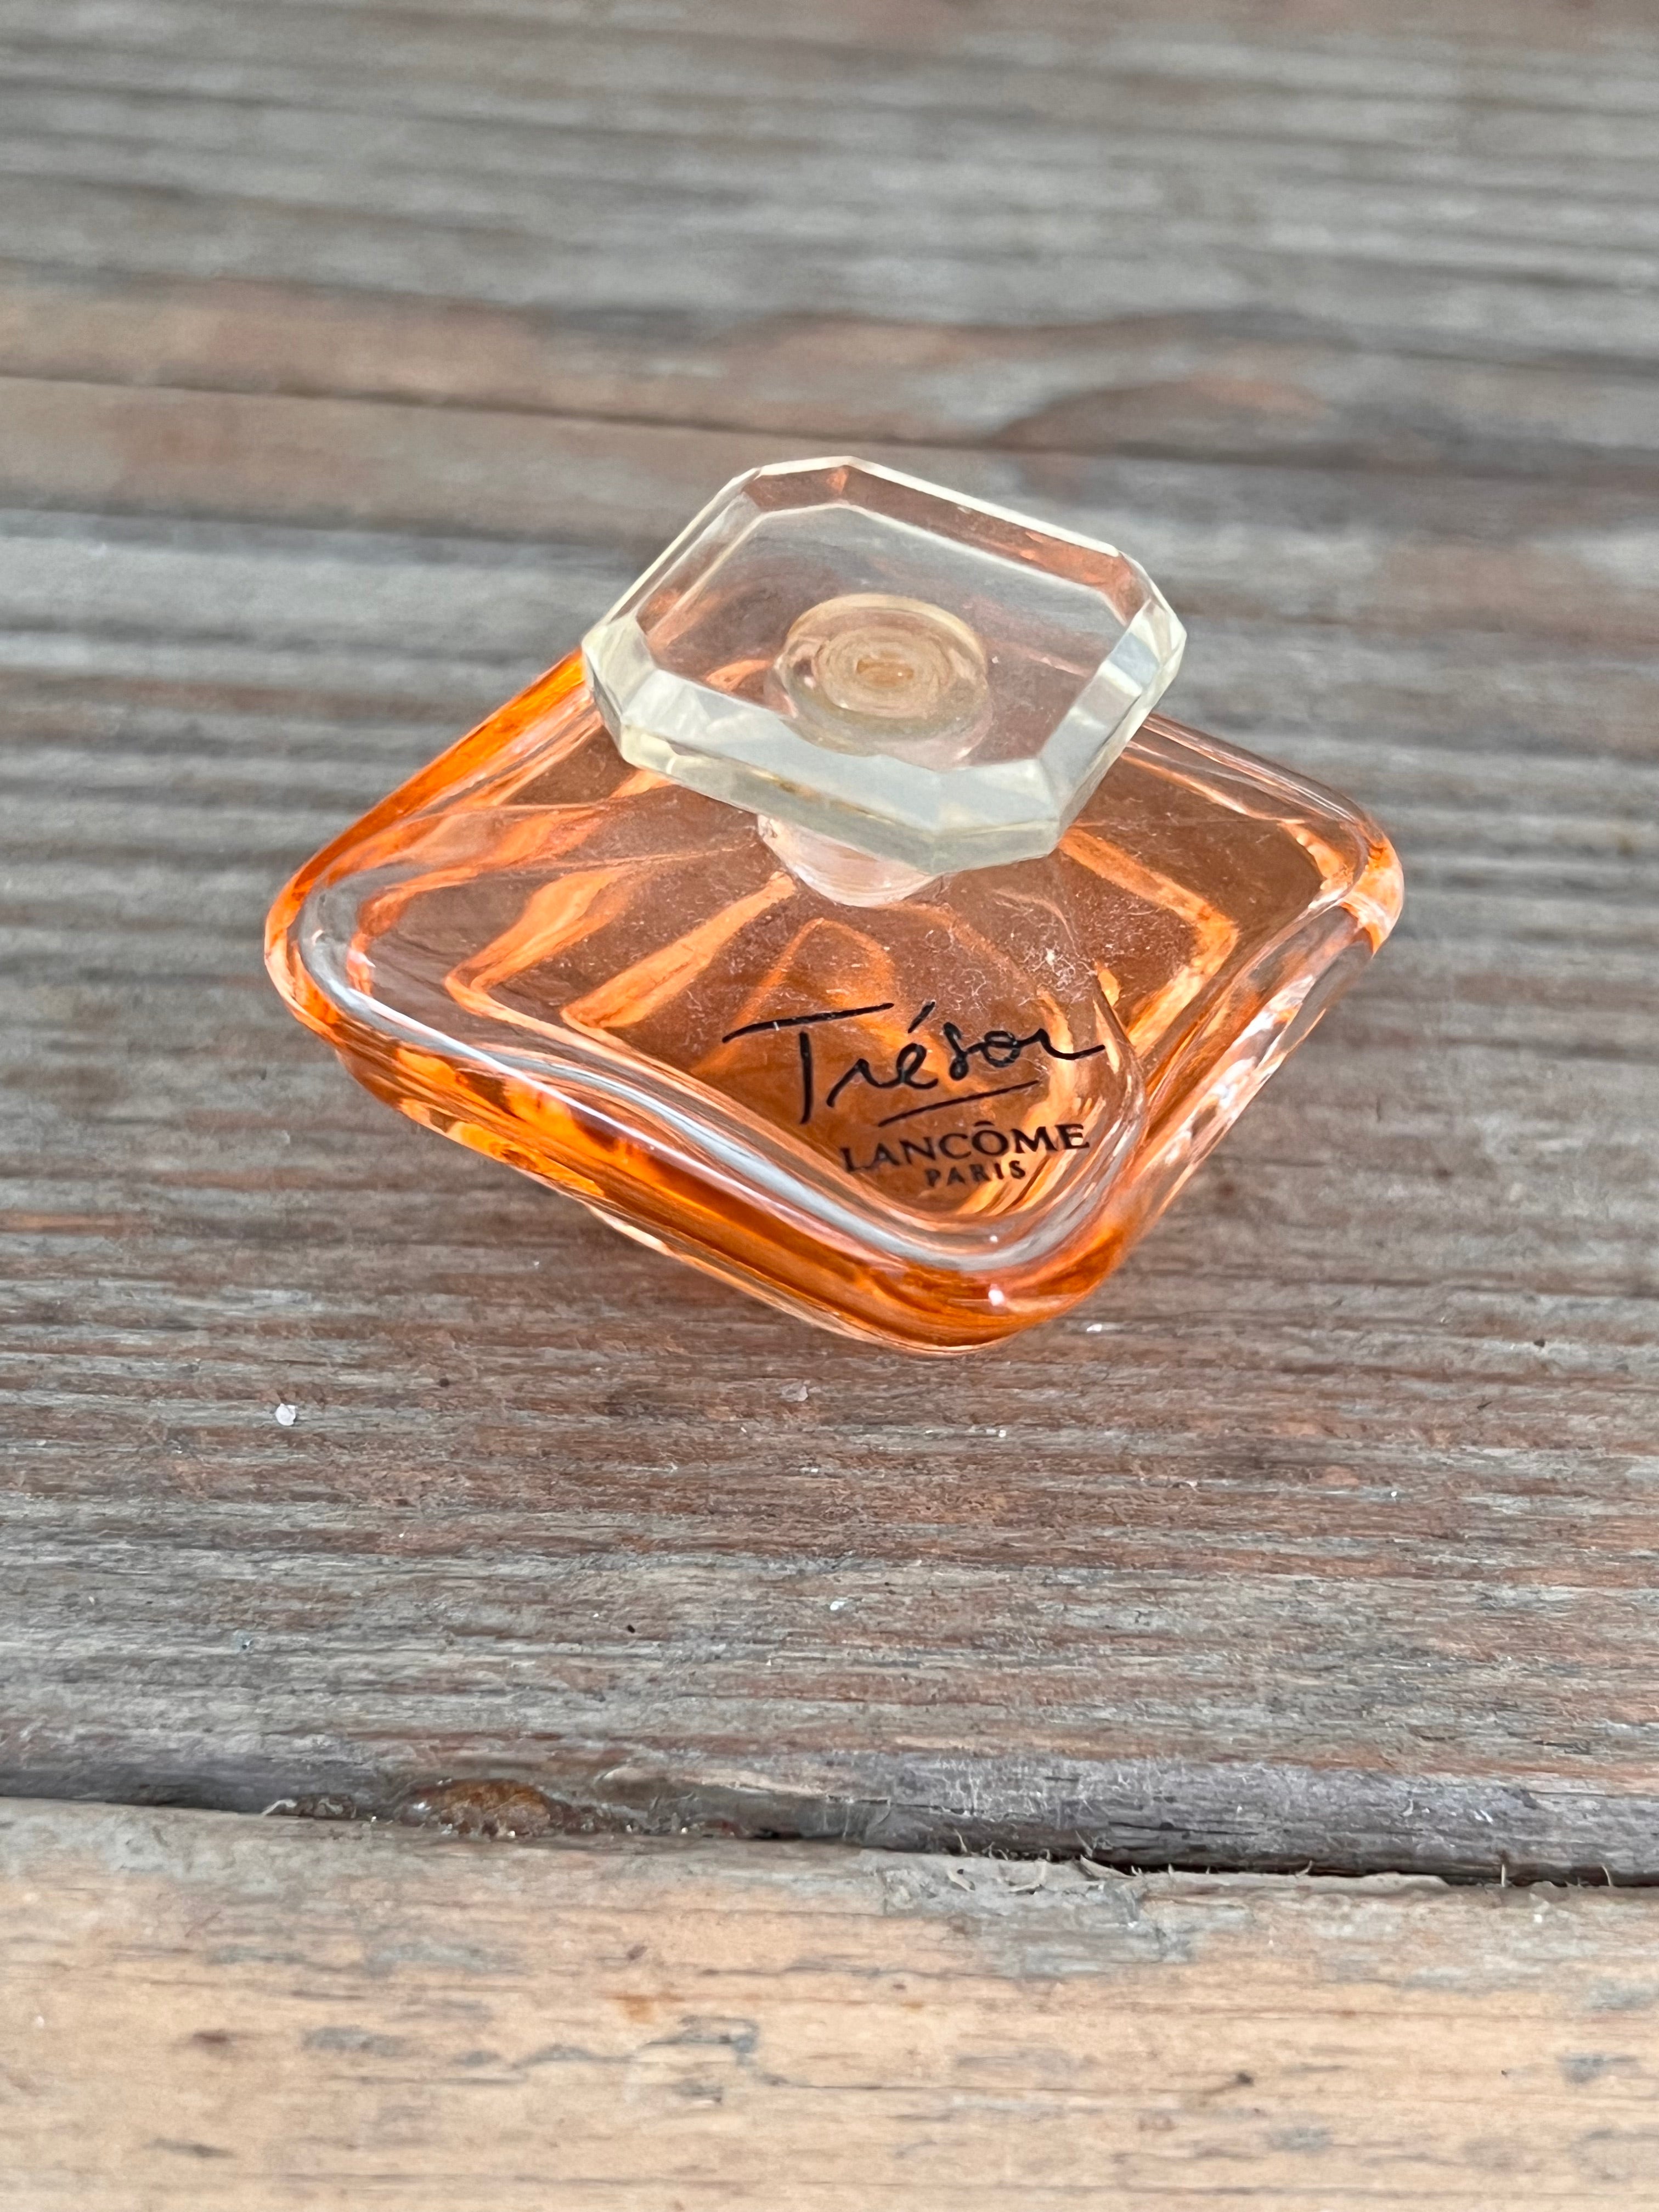 Miniatuur parfumflesje Trésor van Lancôme